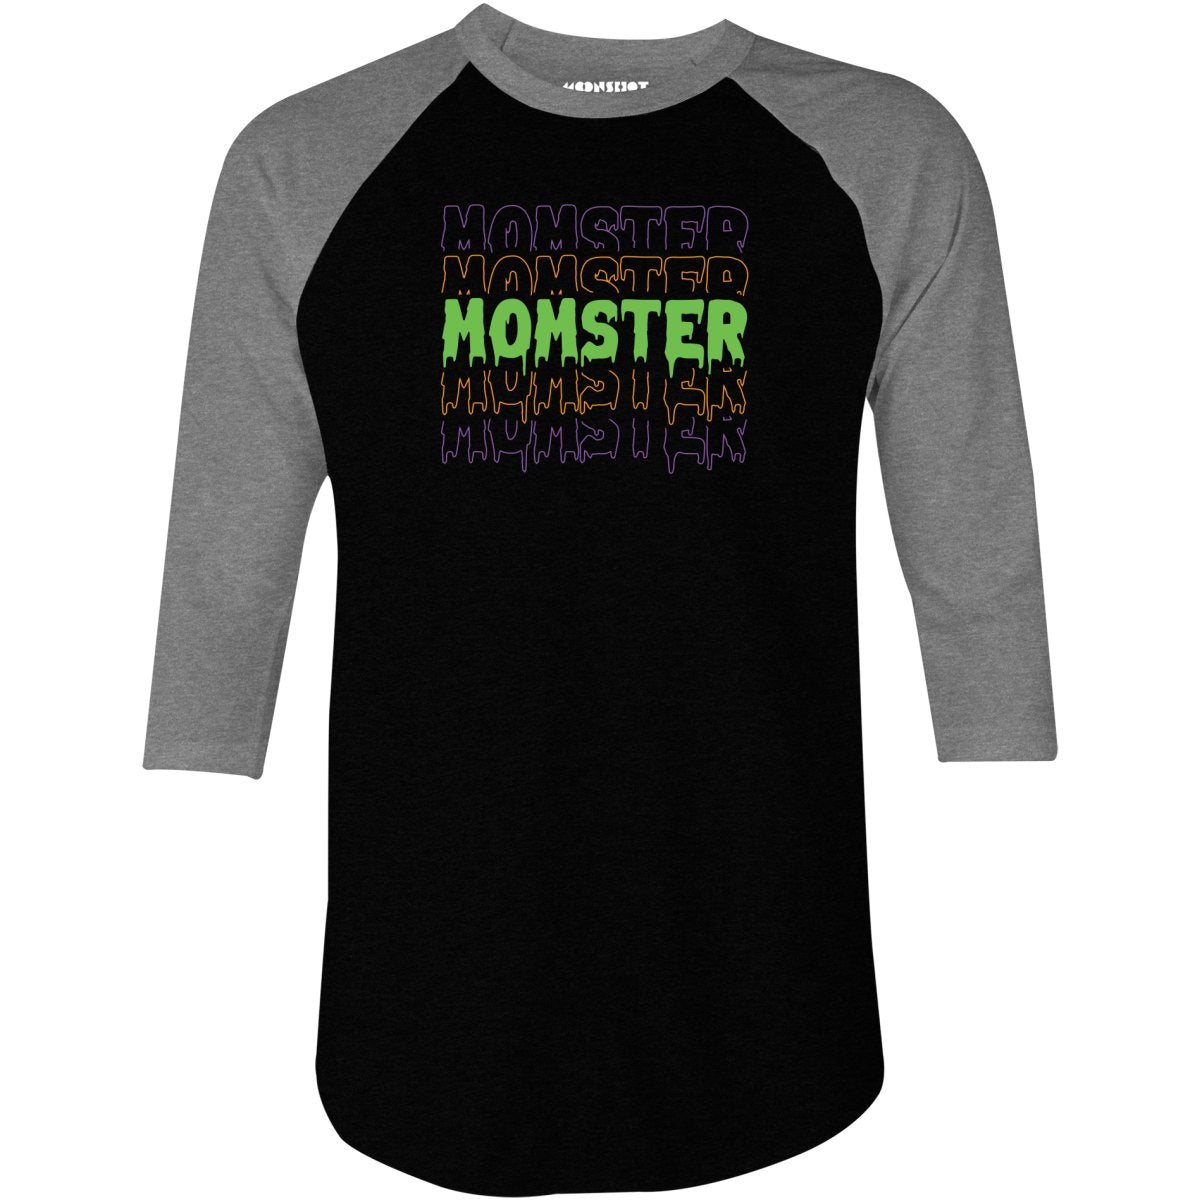 Momster - 3/4 Sleeve Raglan T-Shirt